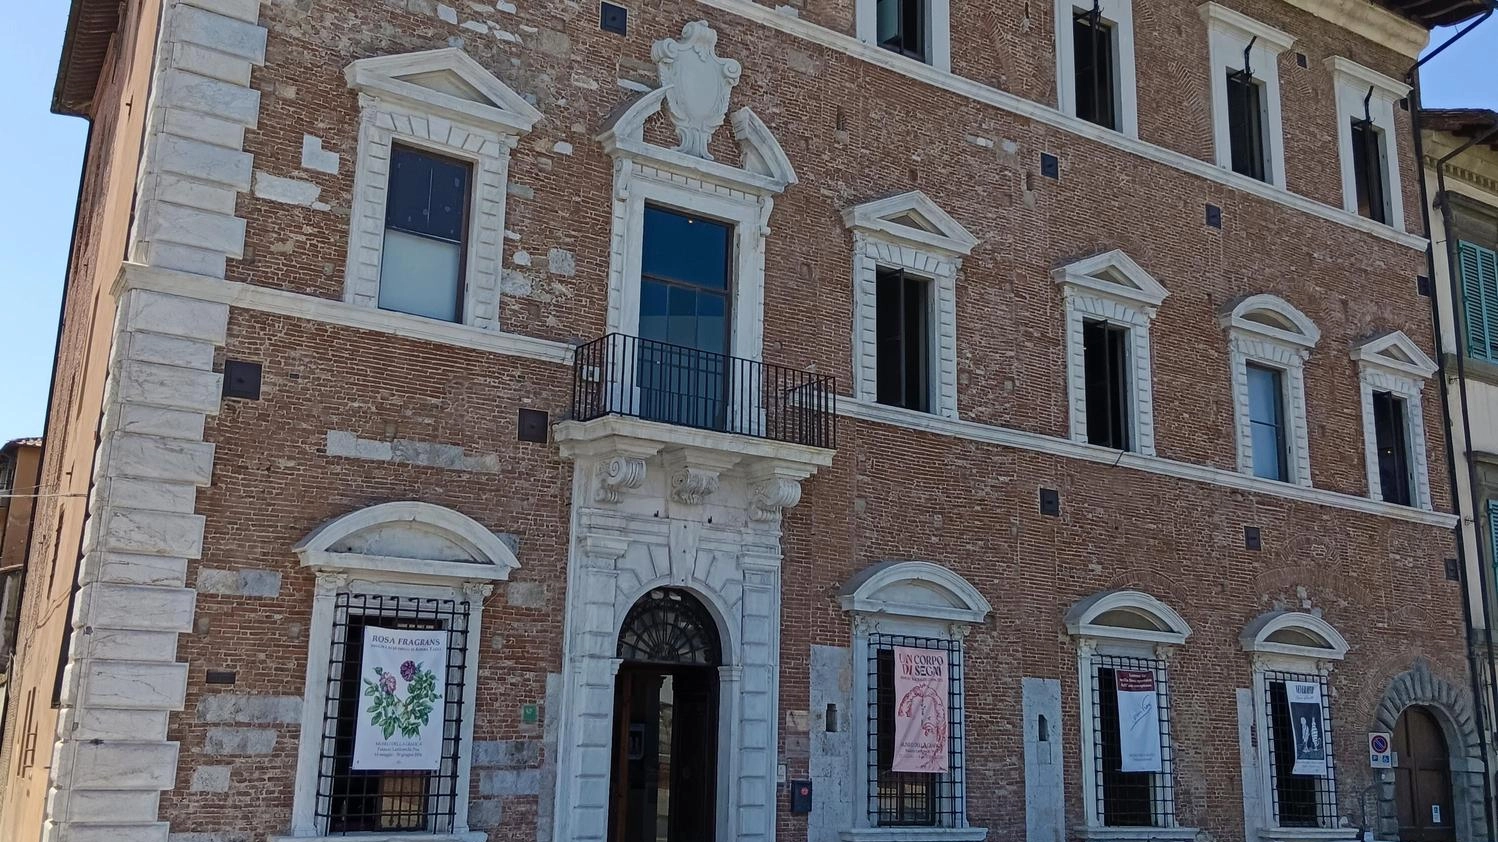 Palazzo Lanfranchi: "Nuovo splendore"